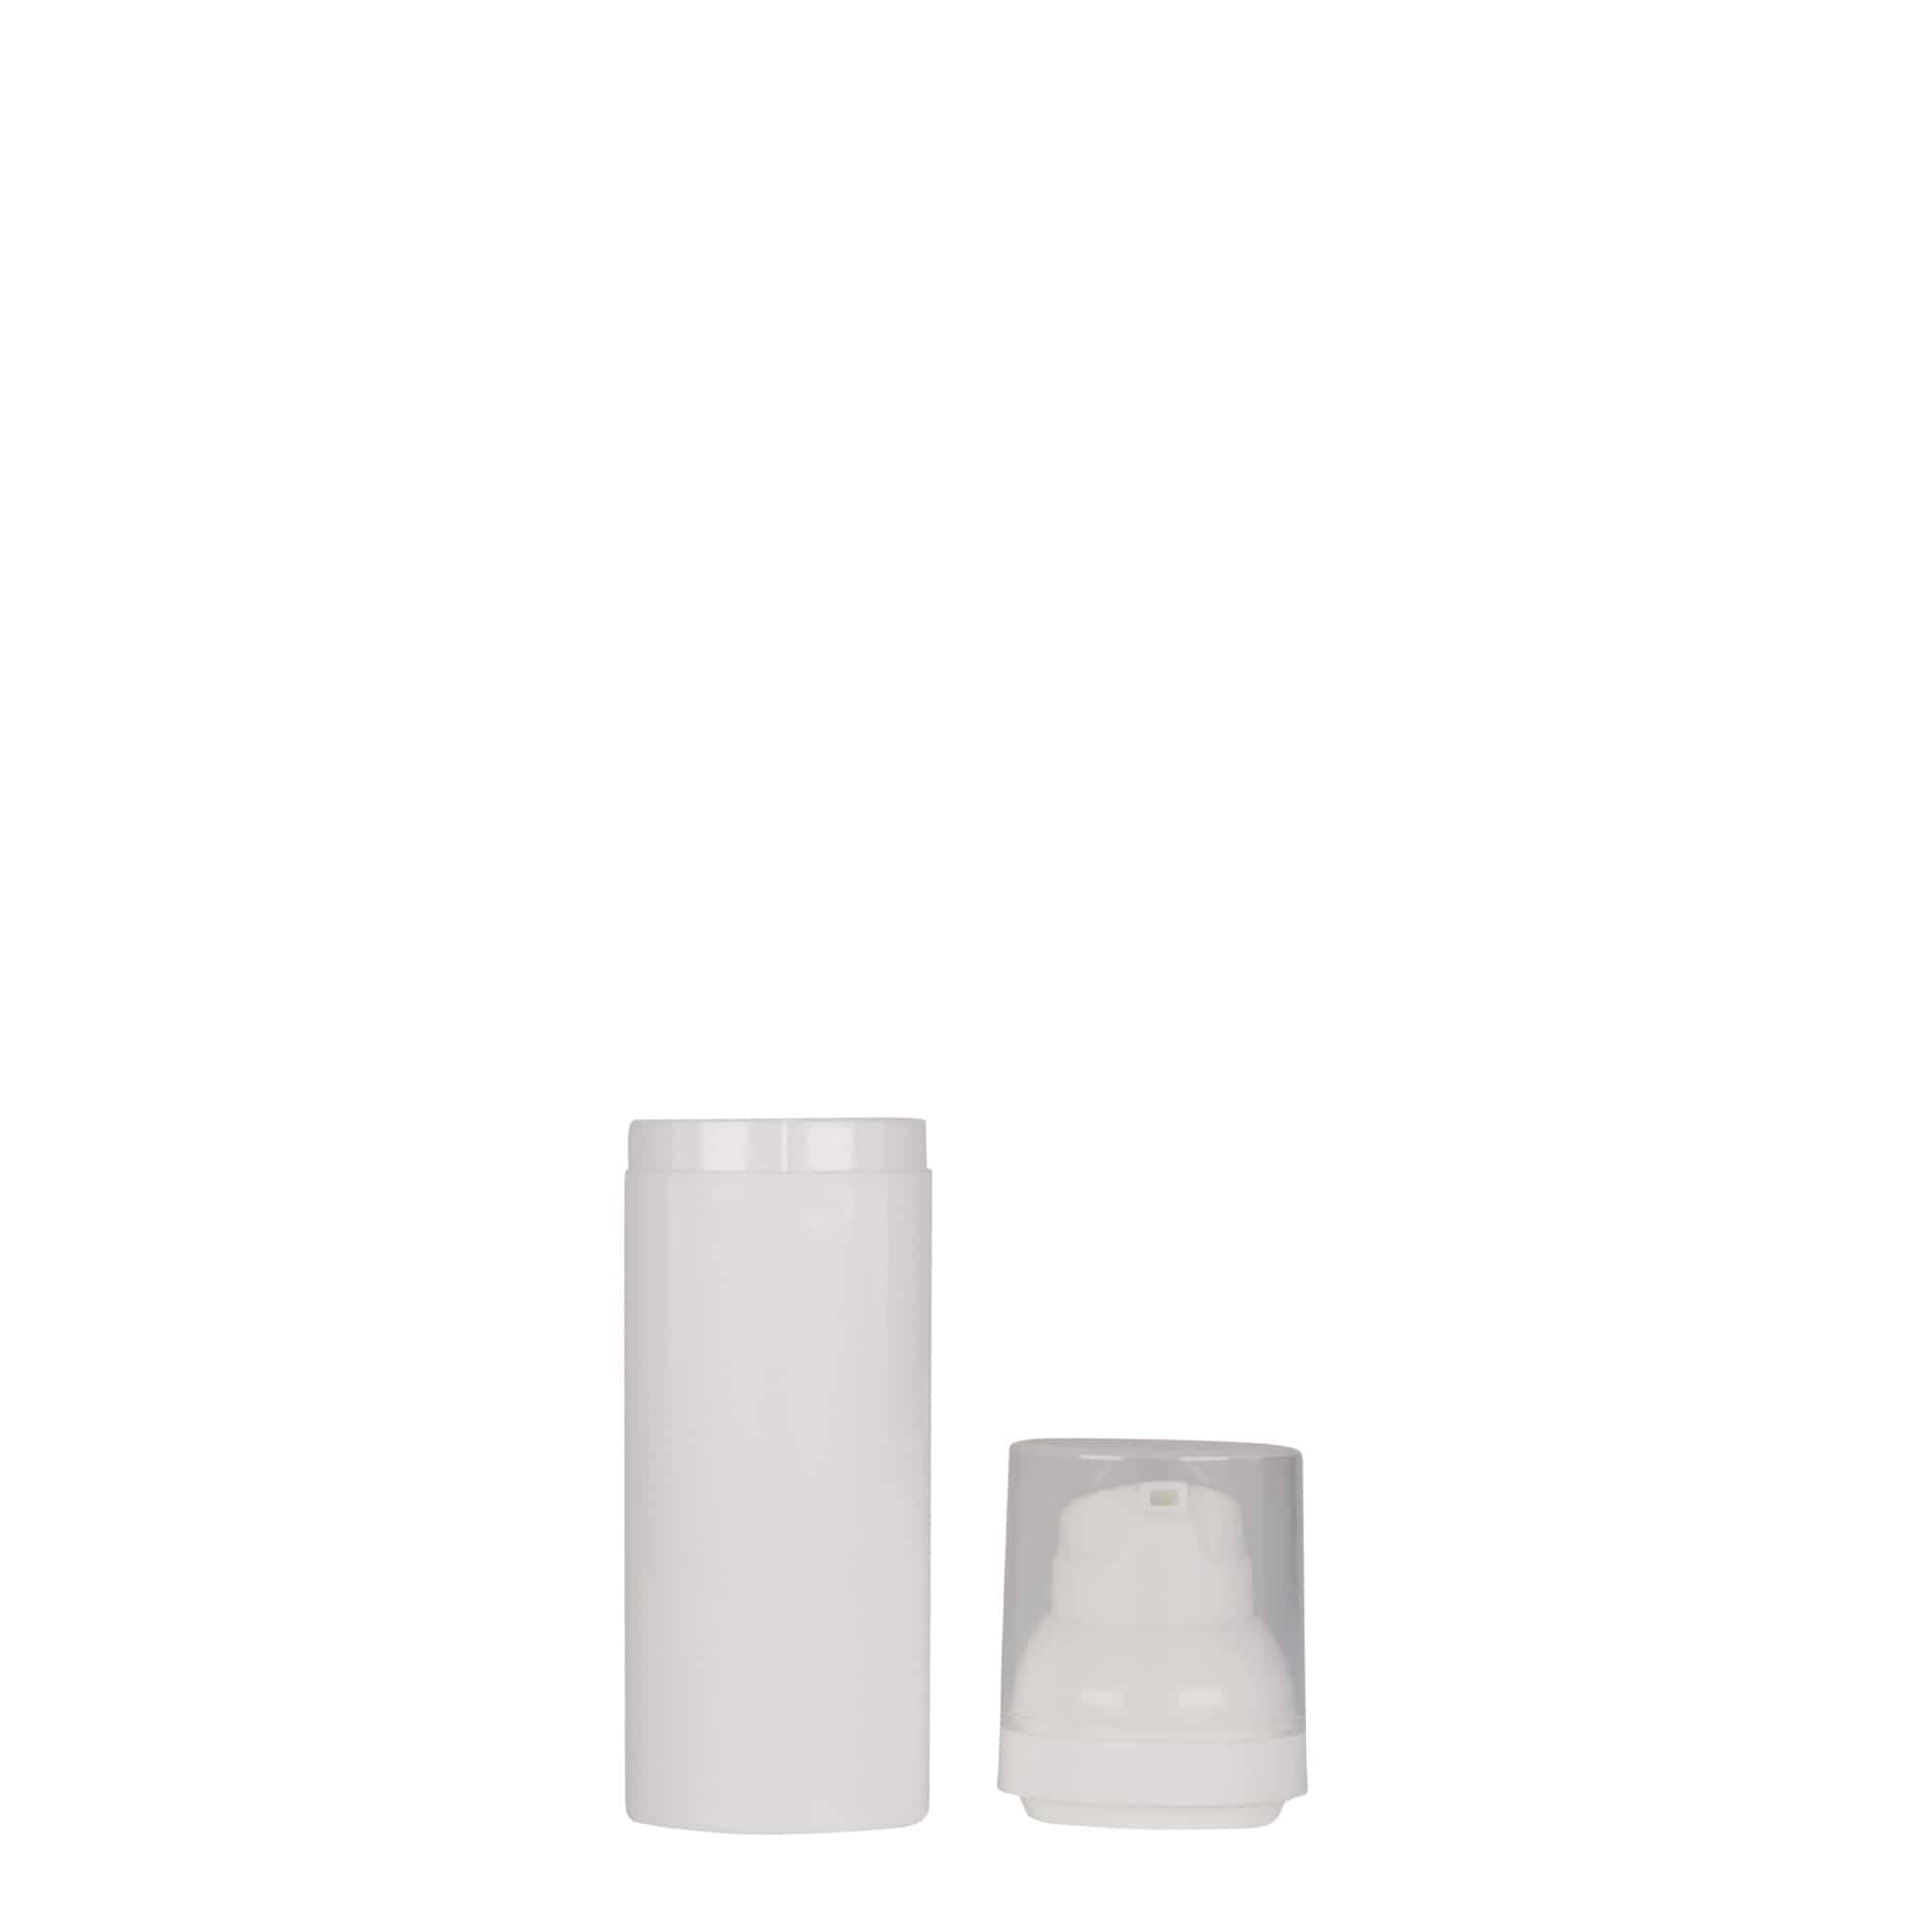 Flacon airless 50 ml 'Mezzo', plastique PP, blanc